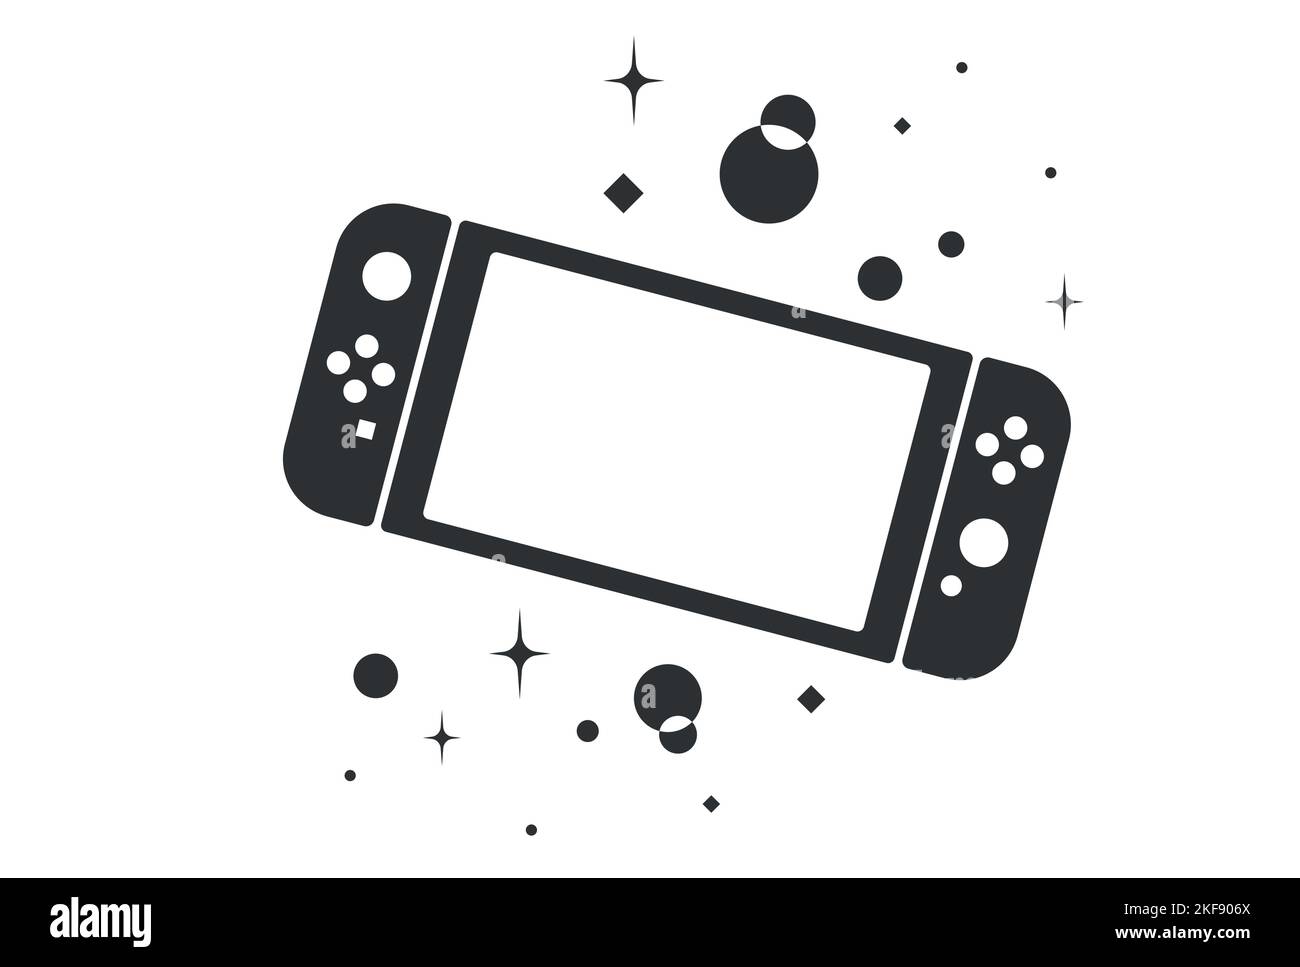 Nintendo Switch Game controller design template icon. Stock Vector